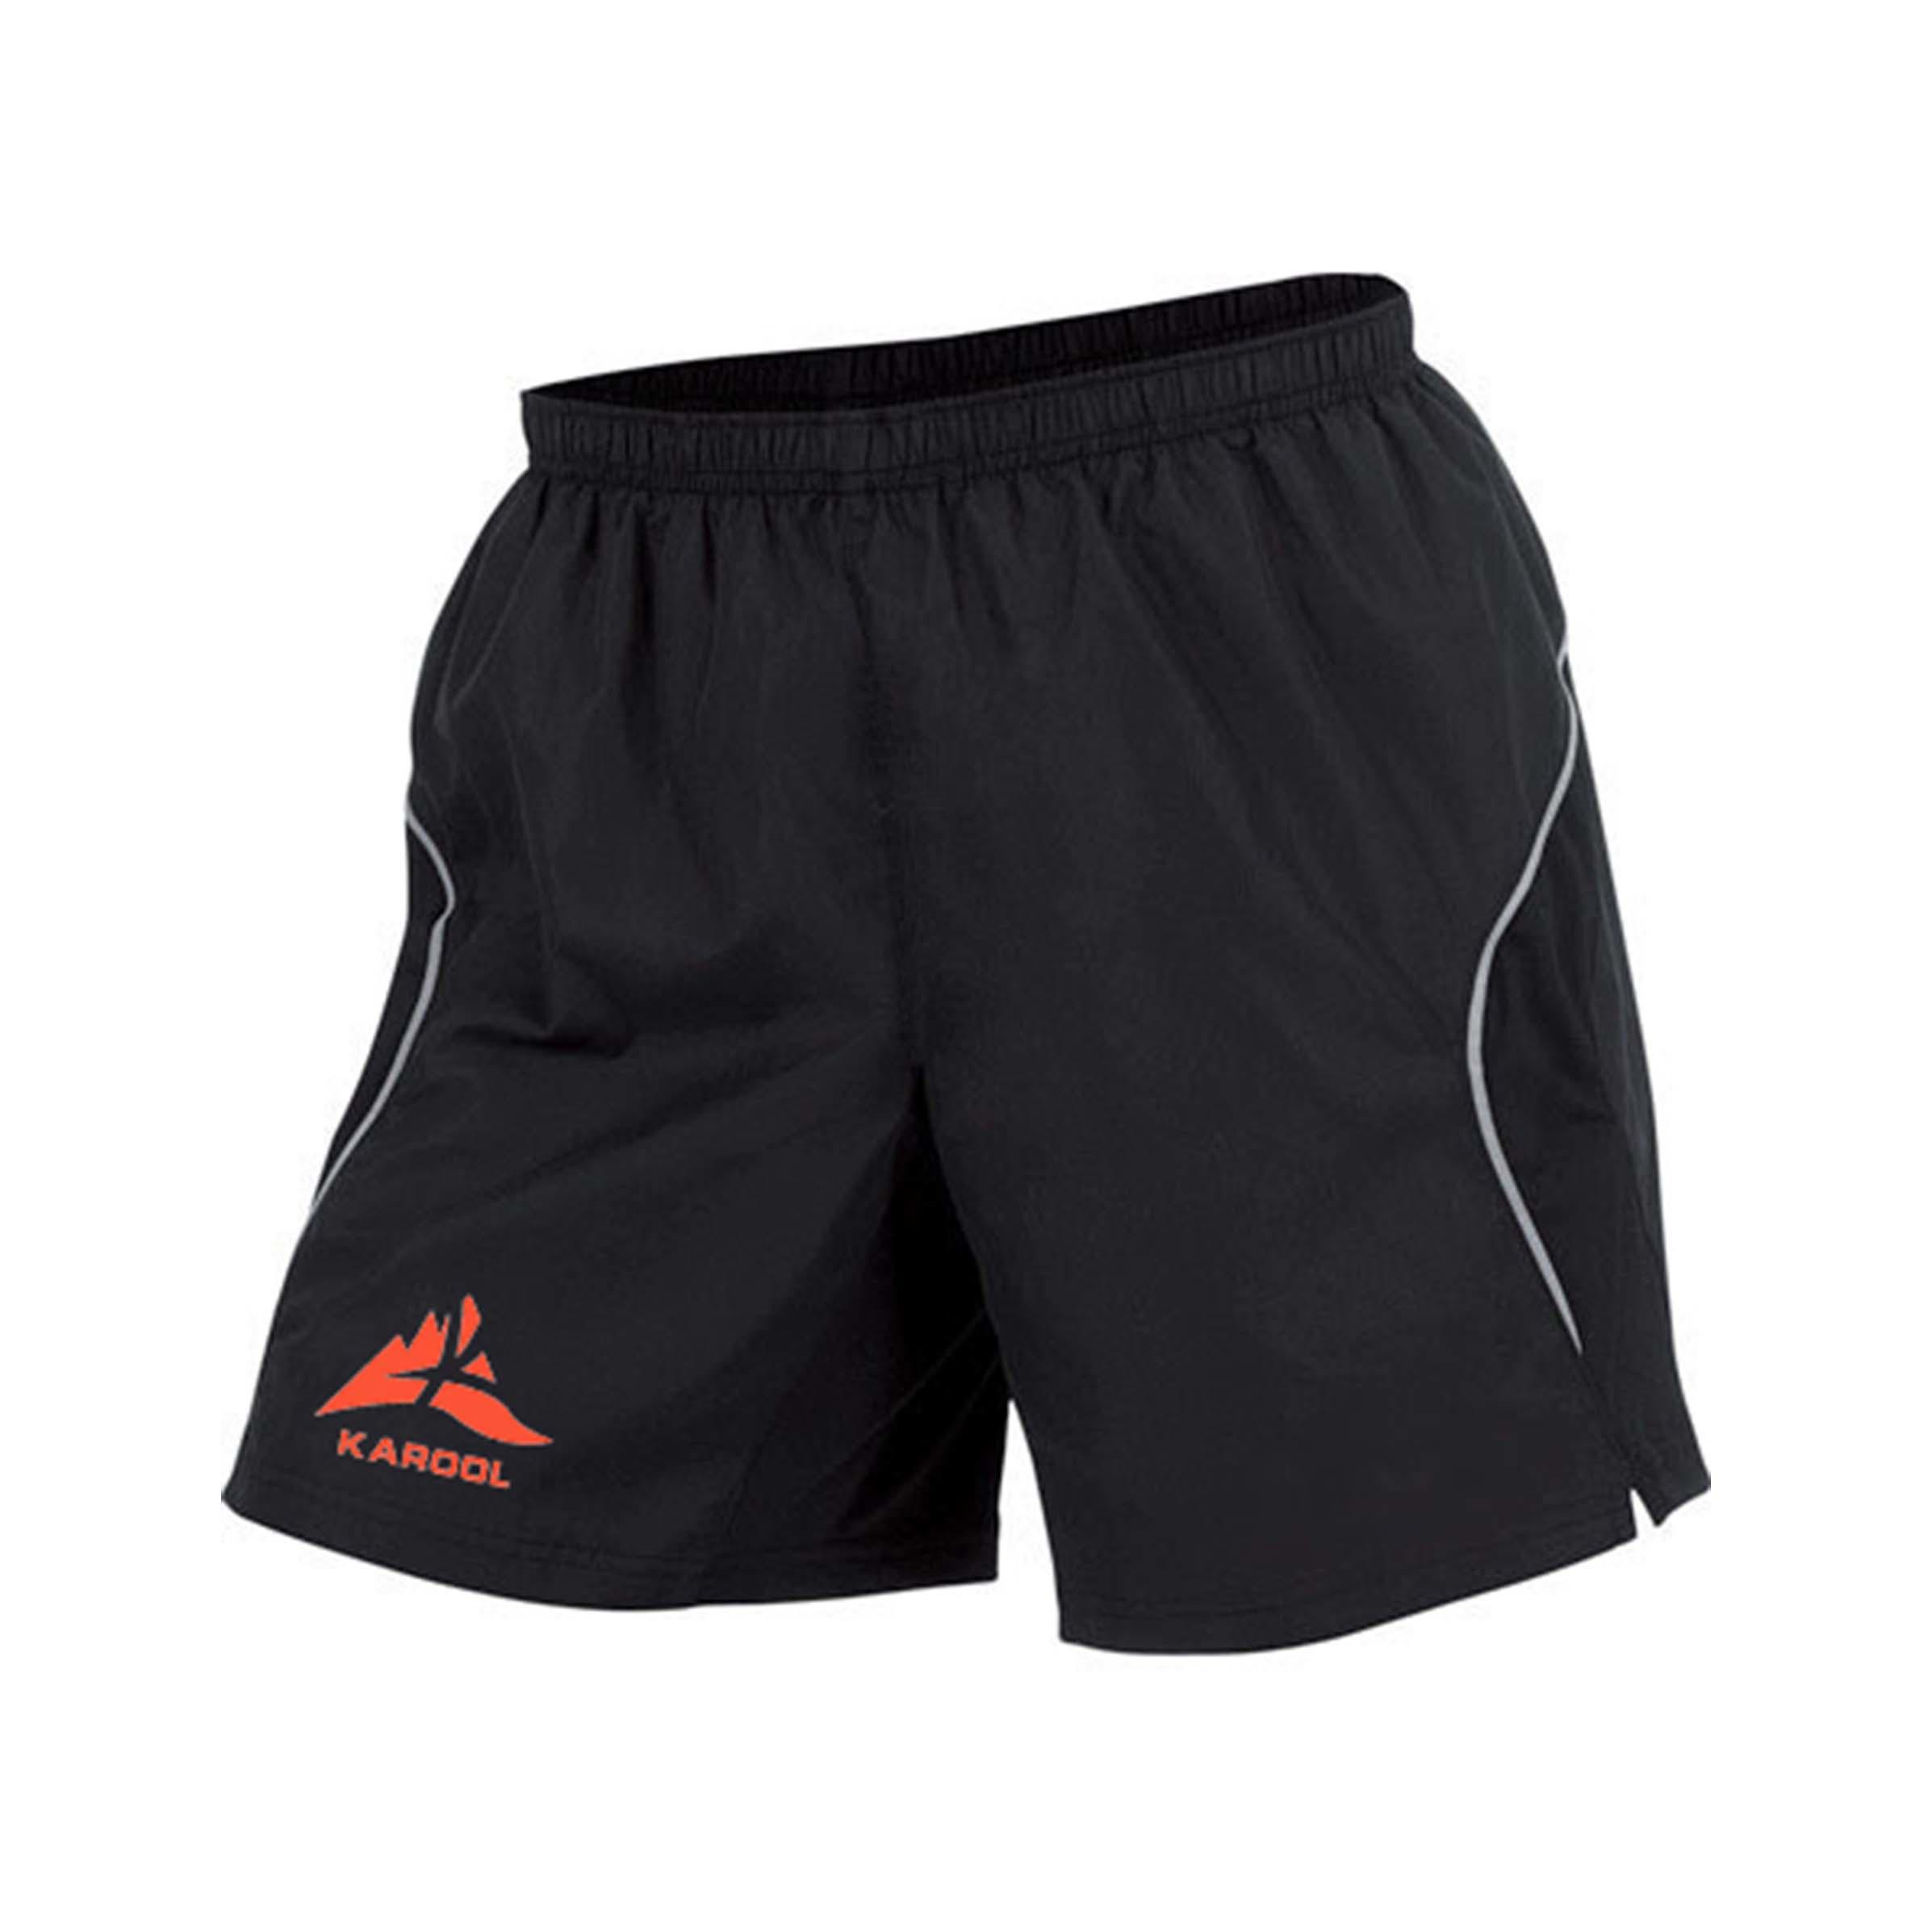 Karool mens short running shorts with good price for women-1